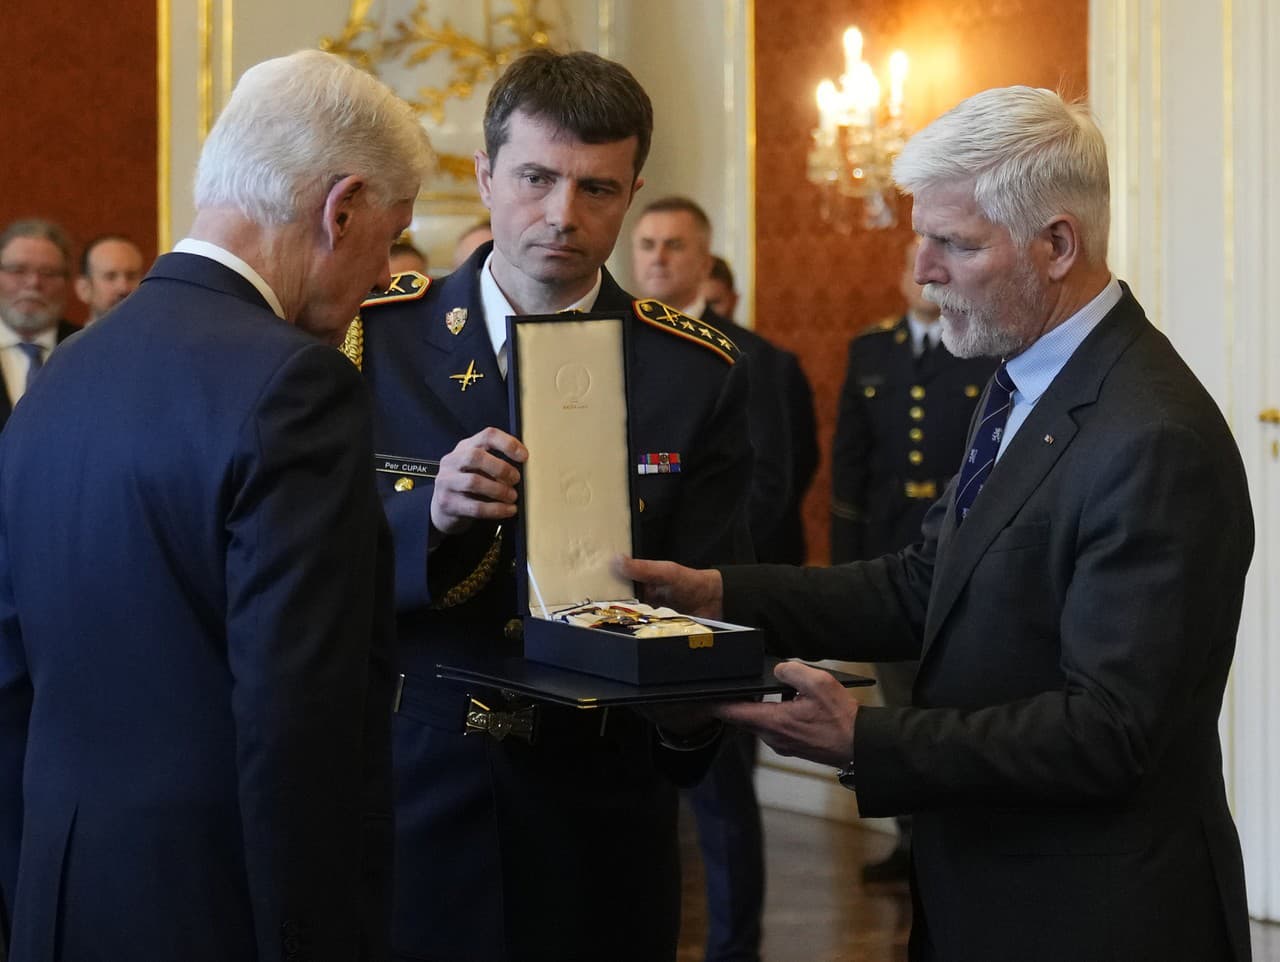 Prezident Pavel udelil Clintonovi Rad T.G. Masaryka za zásluhy o rozvoj demokracie